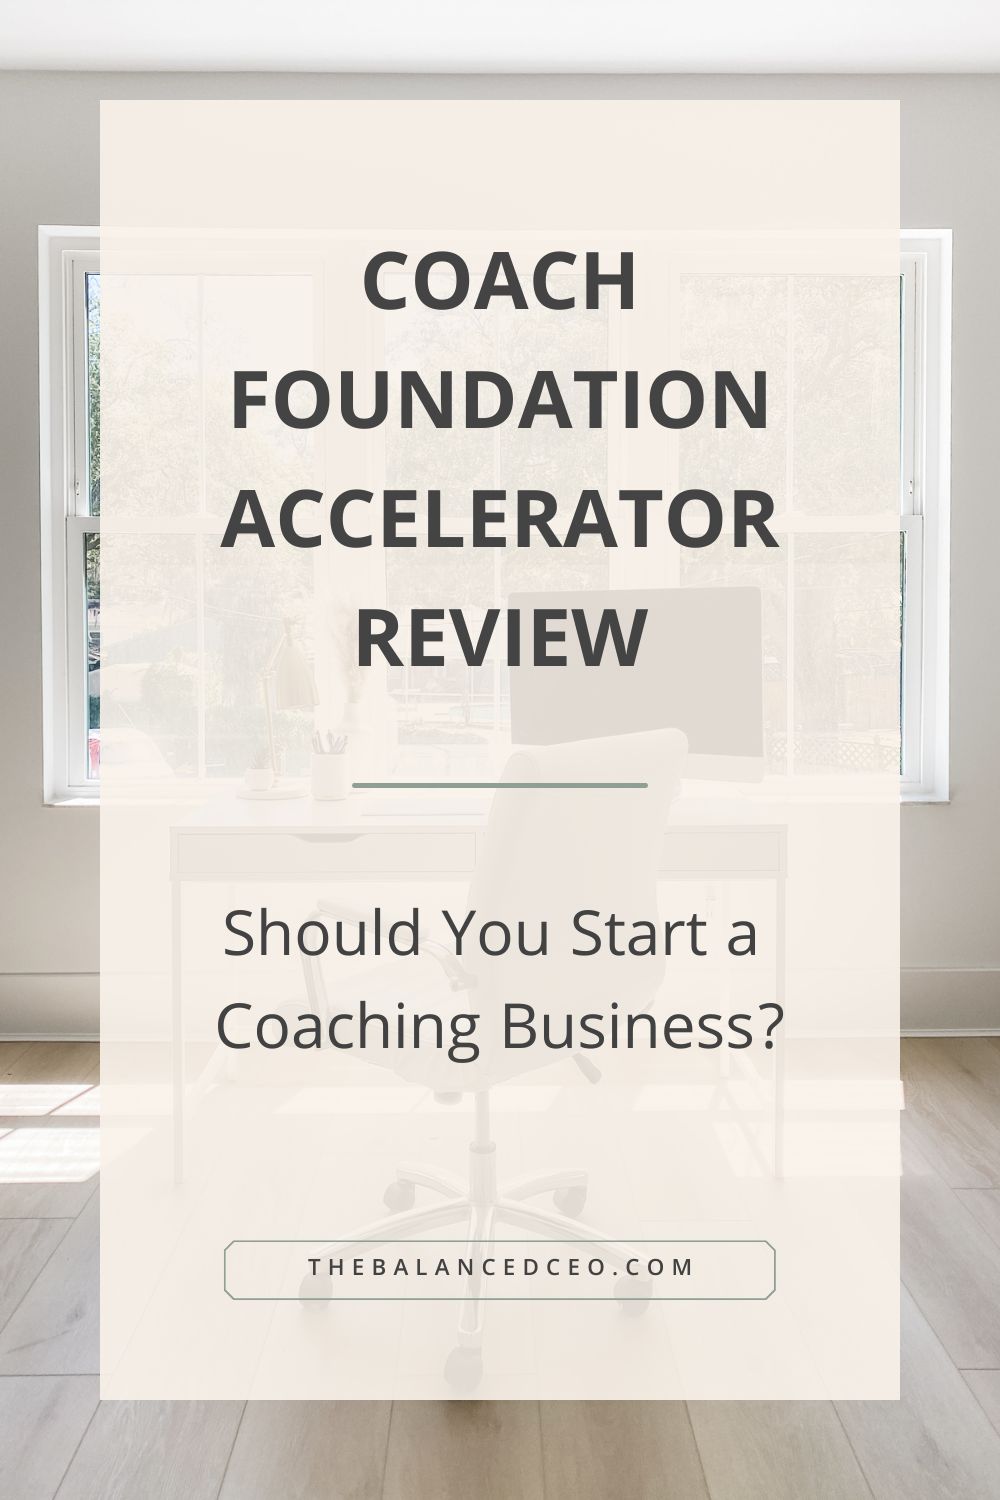 Coach Foundation Accelerator Review: Should You Start a Coaching Business?